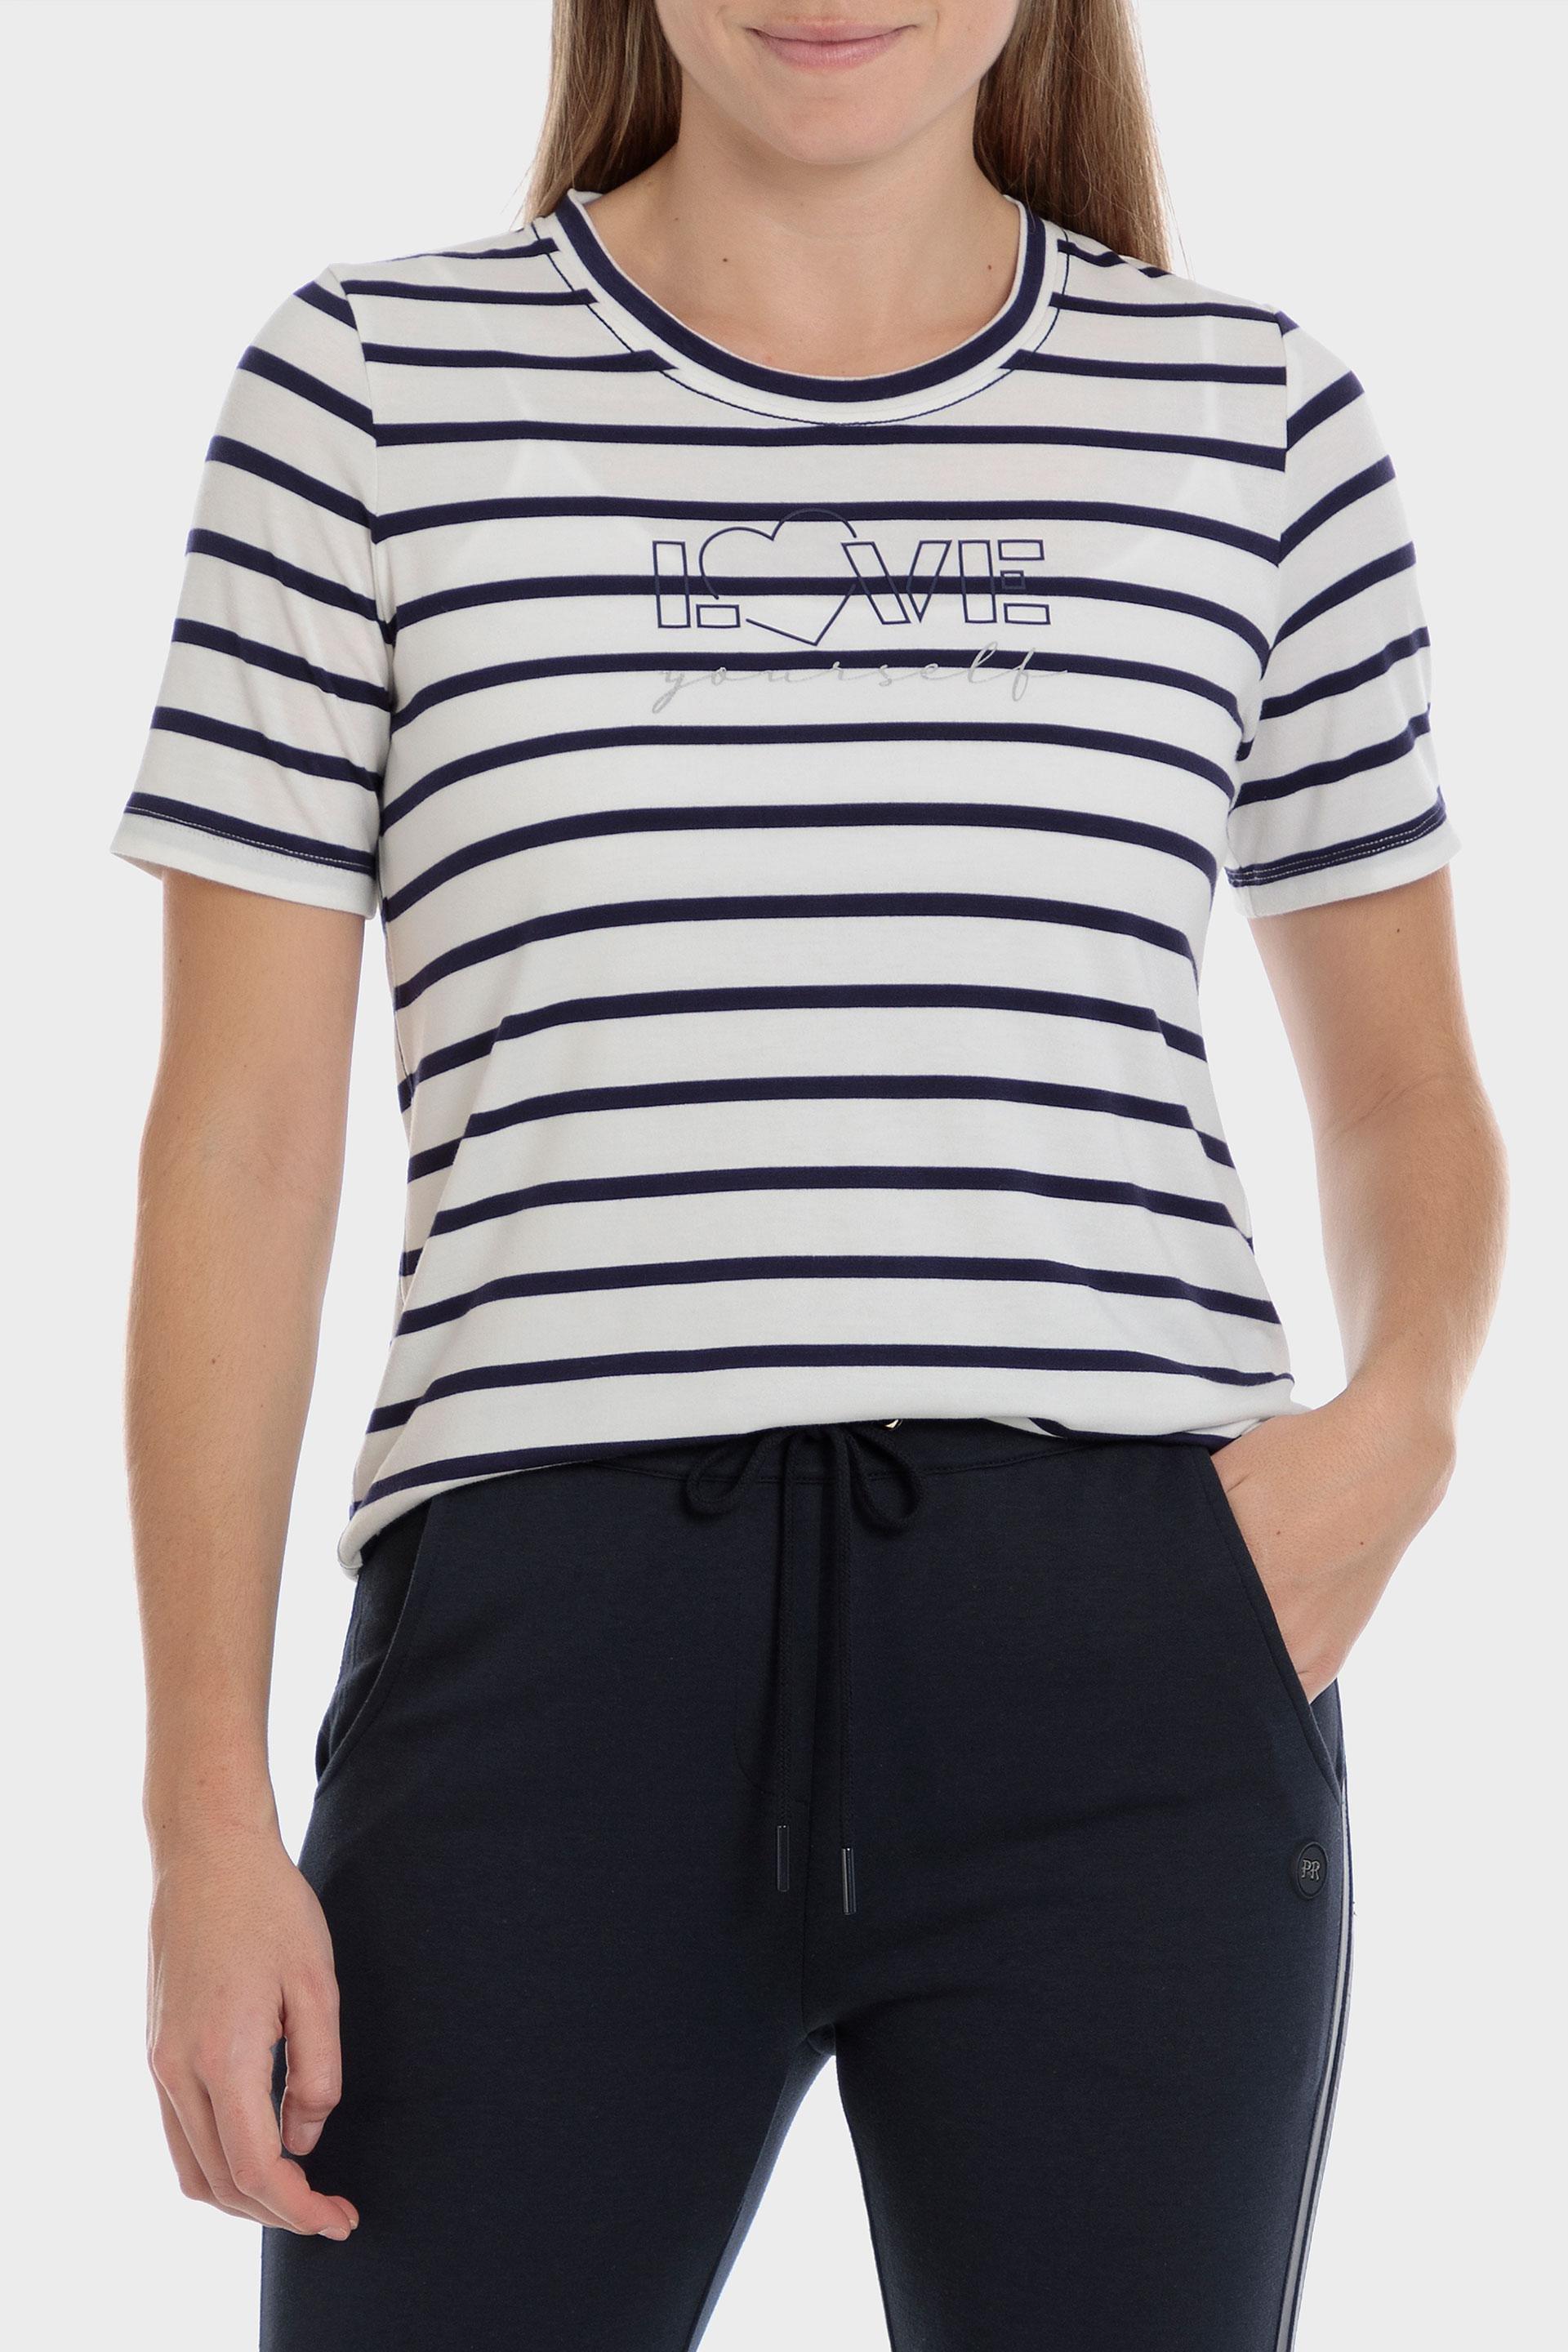 Punt Roma - Multicolour Striped T-Shirt